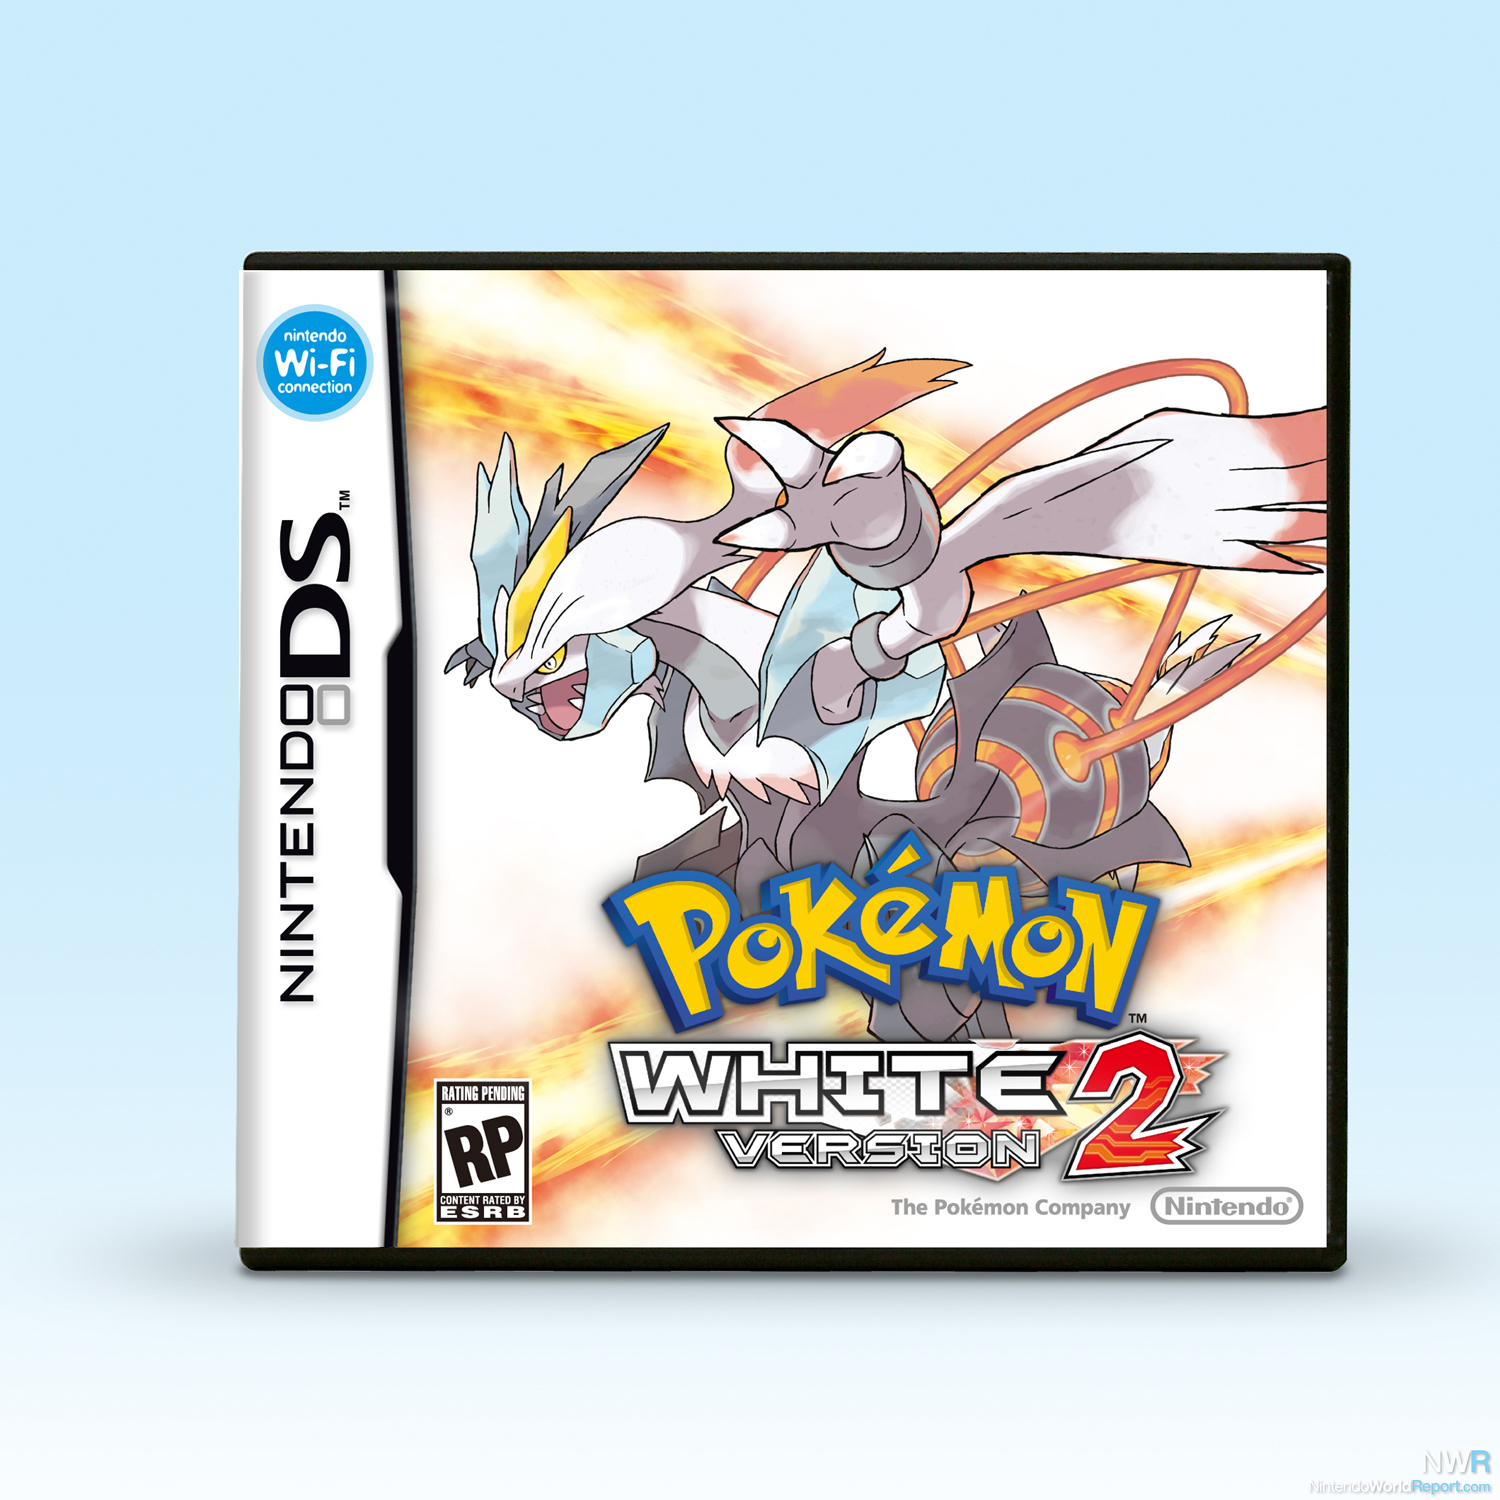 Pokémon Black and White 2 Get North American Box Art, More Details - News -  Nintendo World Report